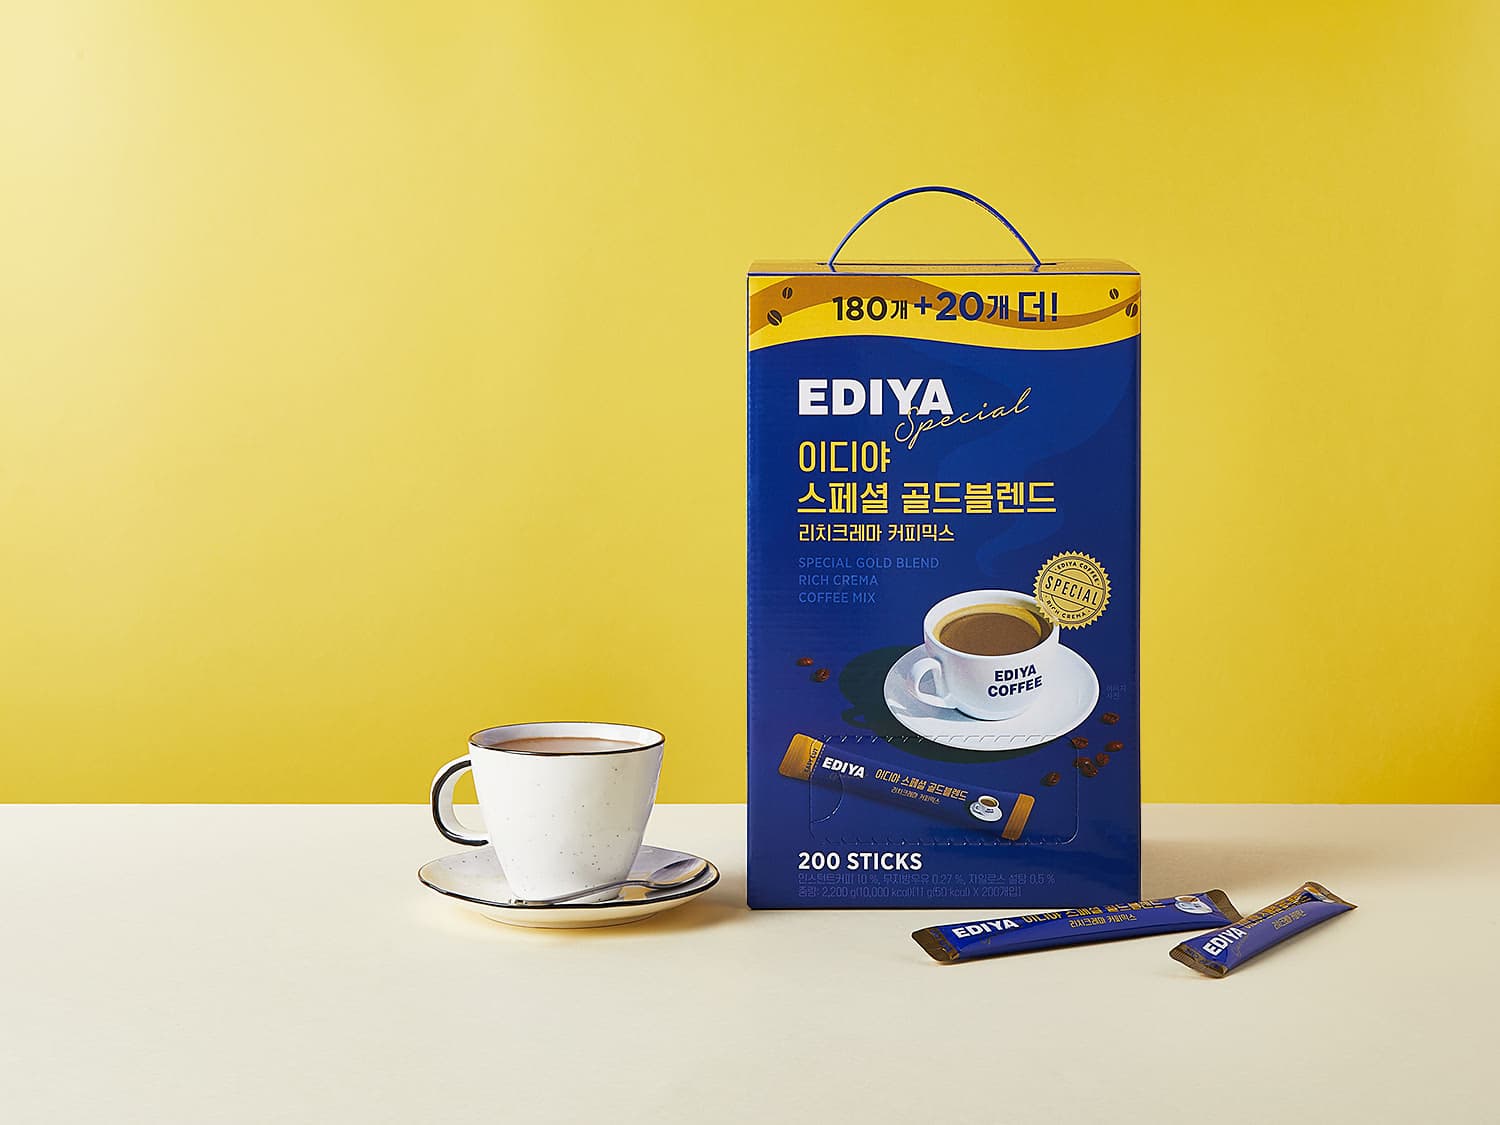 EDIYA Special Gold Blend Rich Crema Coffee Mix | tradekorea